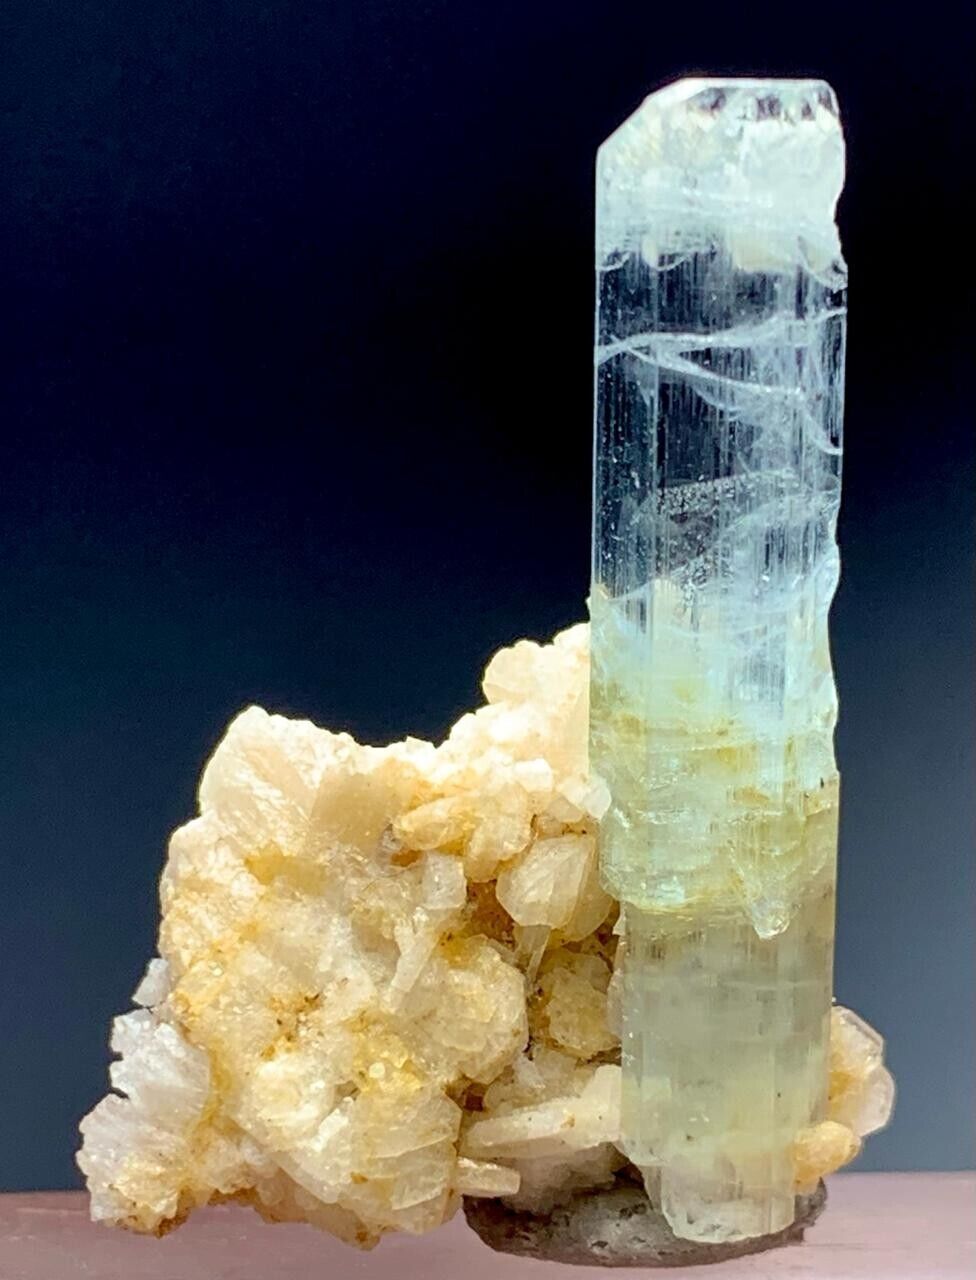 24 Carat aquamarine Crystal Specimen from Pakistan